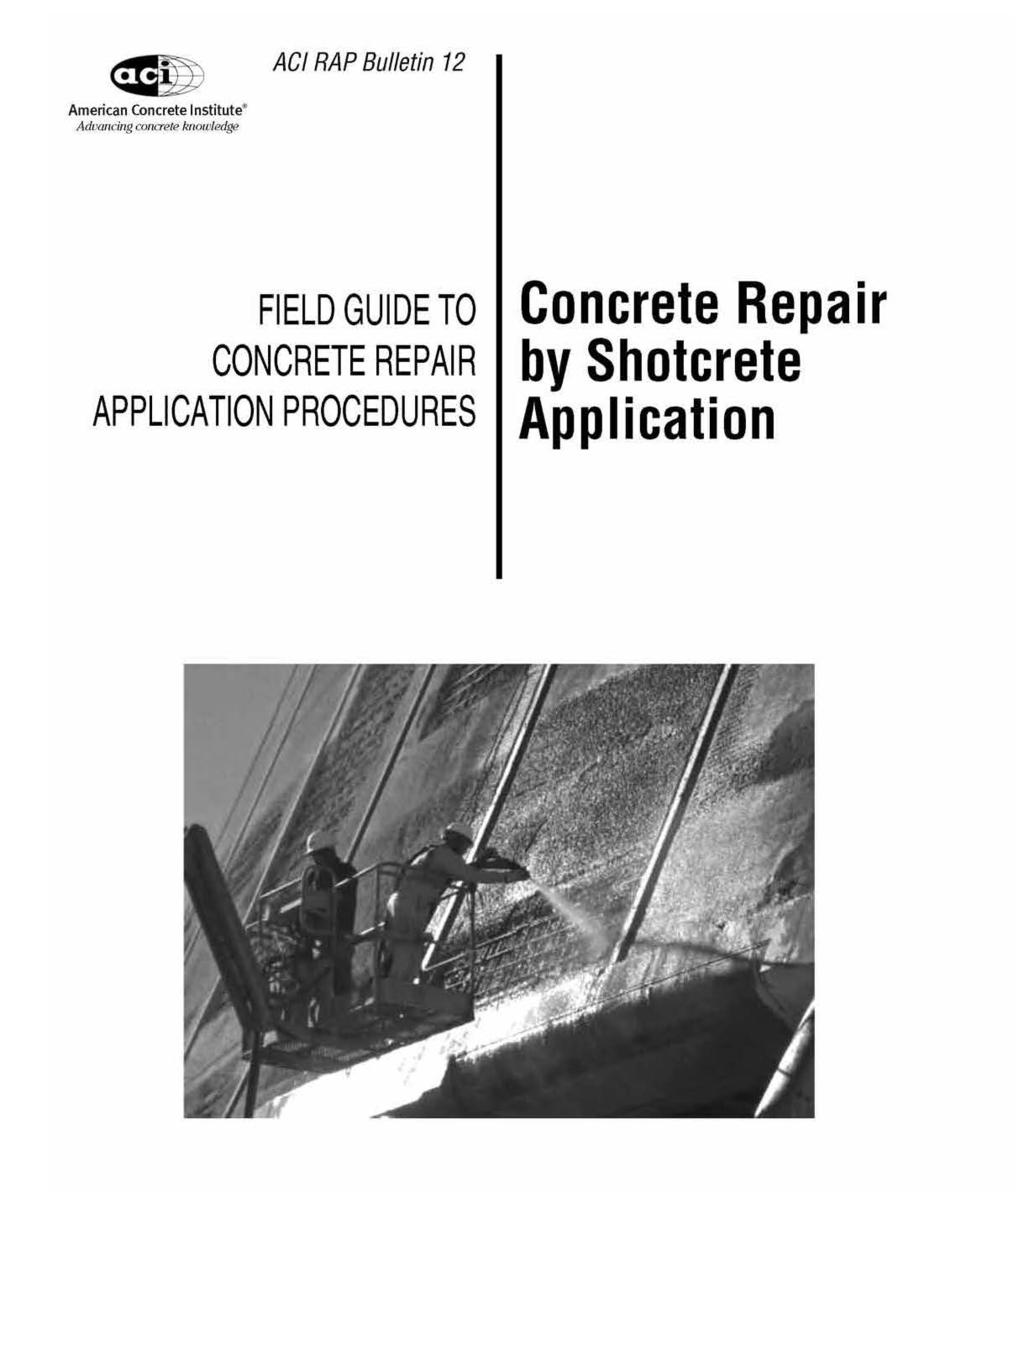 ACI RAP Bulletin 12 Reprinted with permission from the American Concrete Institute American Concrete Institute"' Advancing